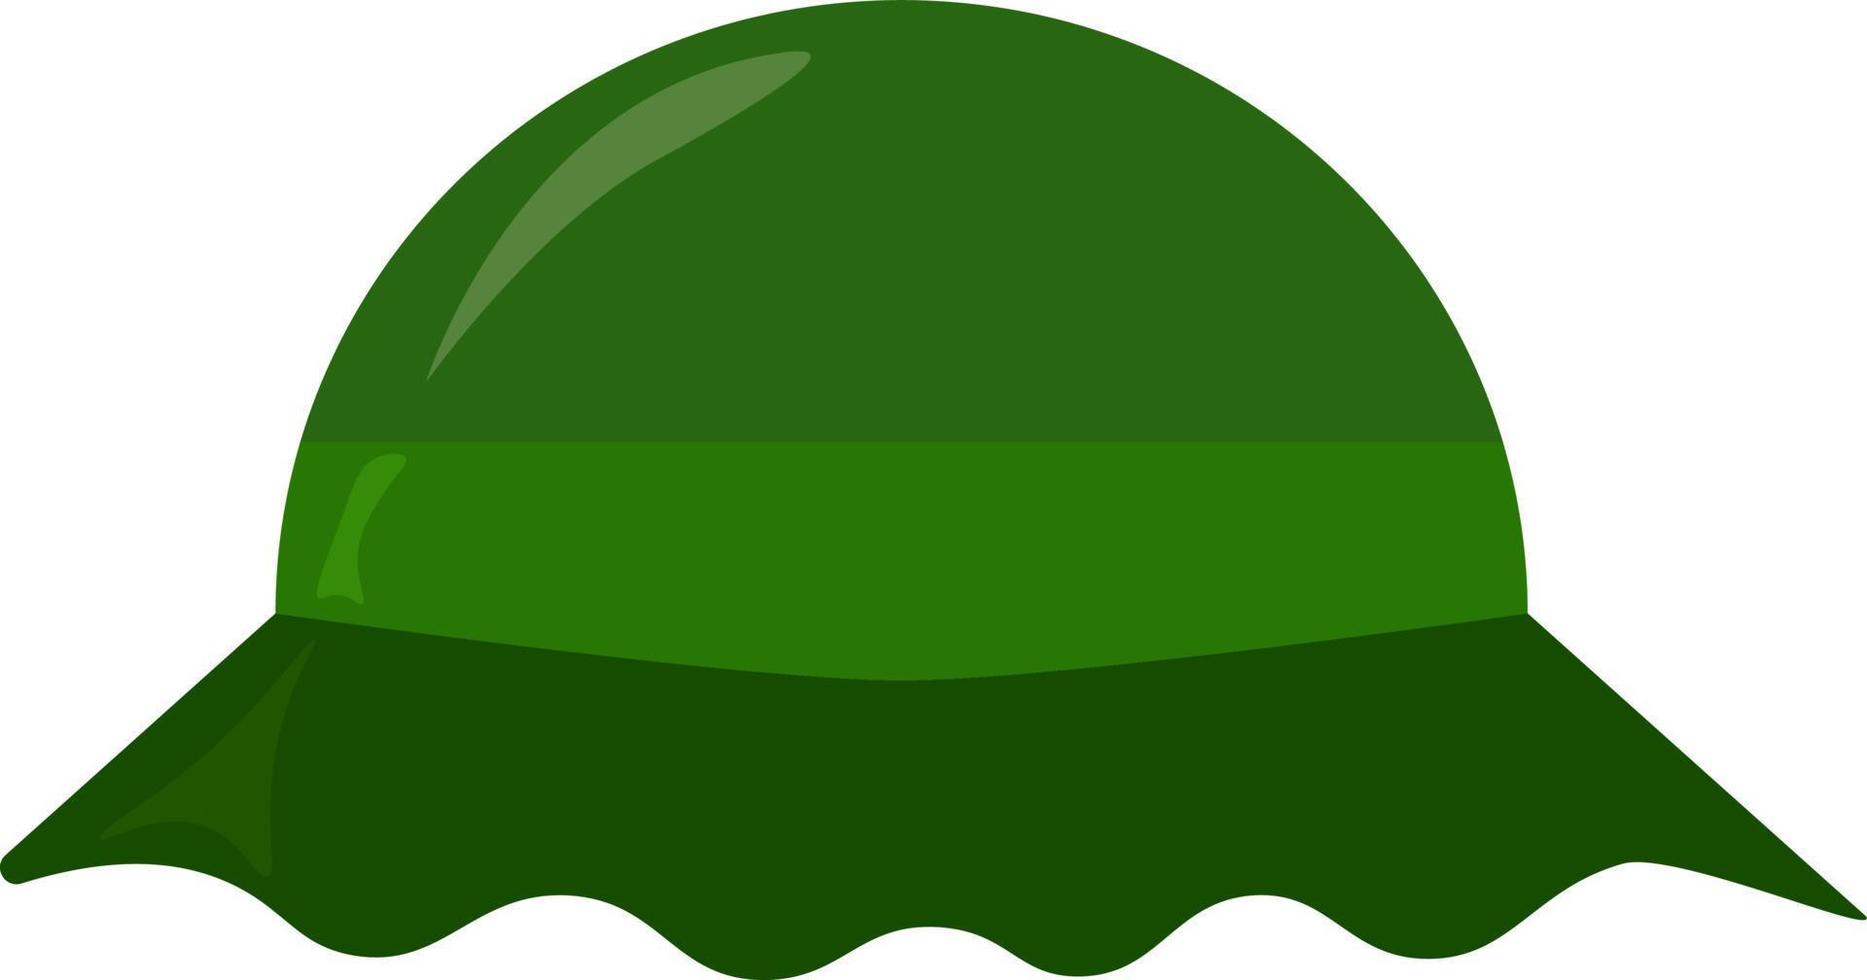 Green hat, illustration, vector on white background.